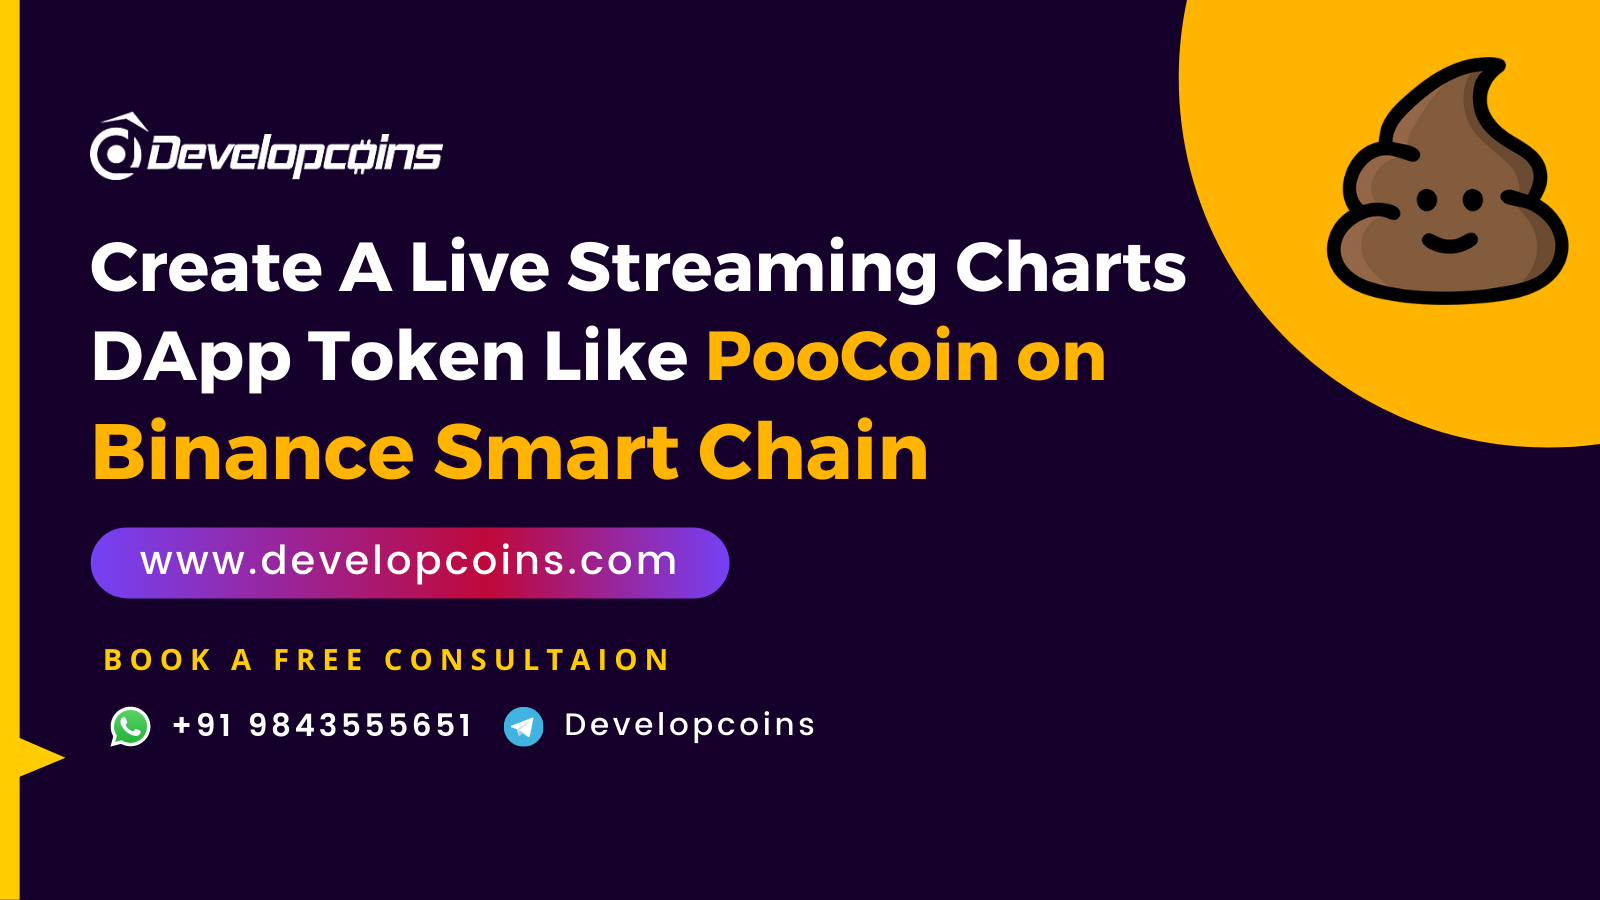 Create A Live Streaming Charts DApp Token Like Poocoin on Binance Smart Chain (BSC)